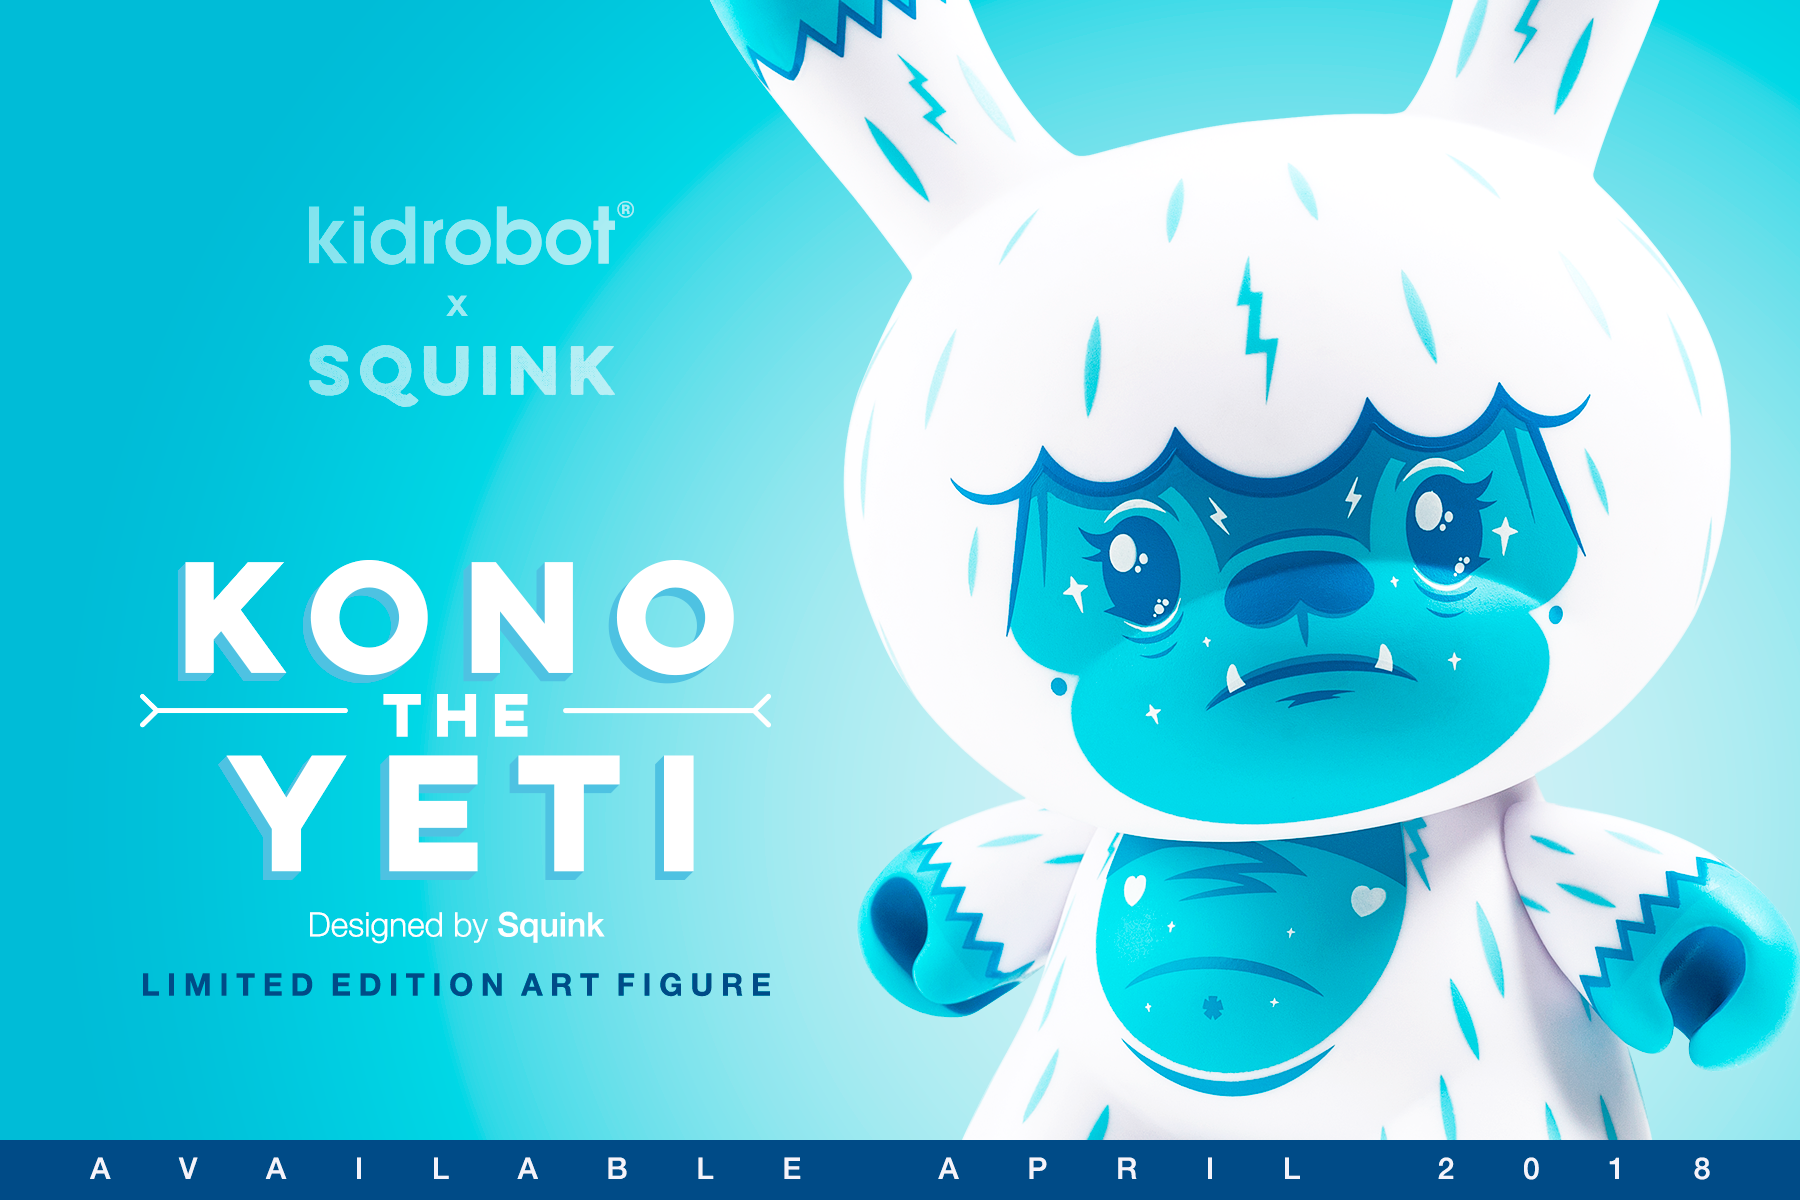 Kidrobot x Kono the Yeti by Squink 8" Dunny